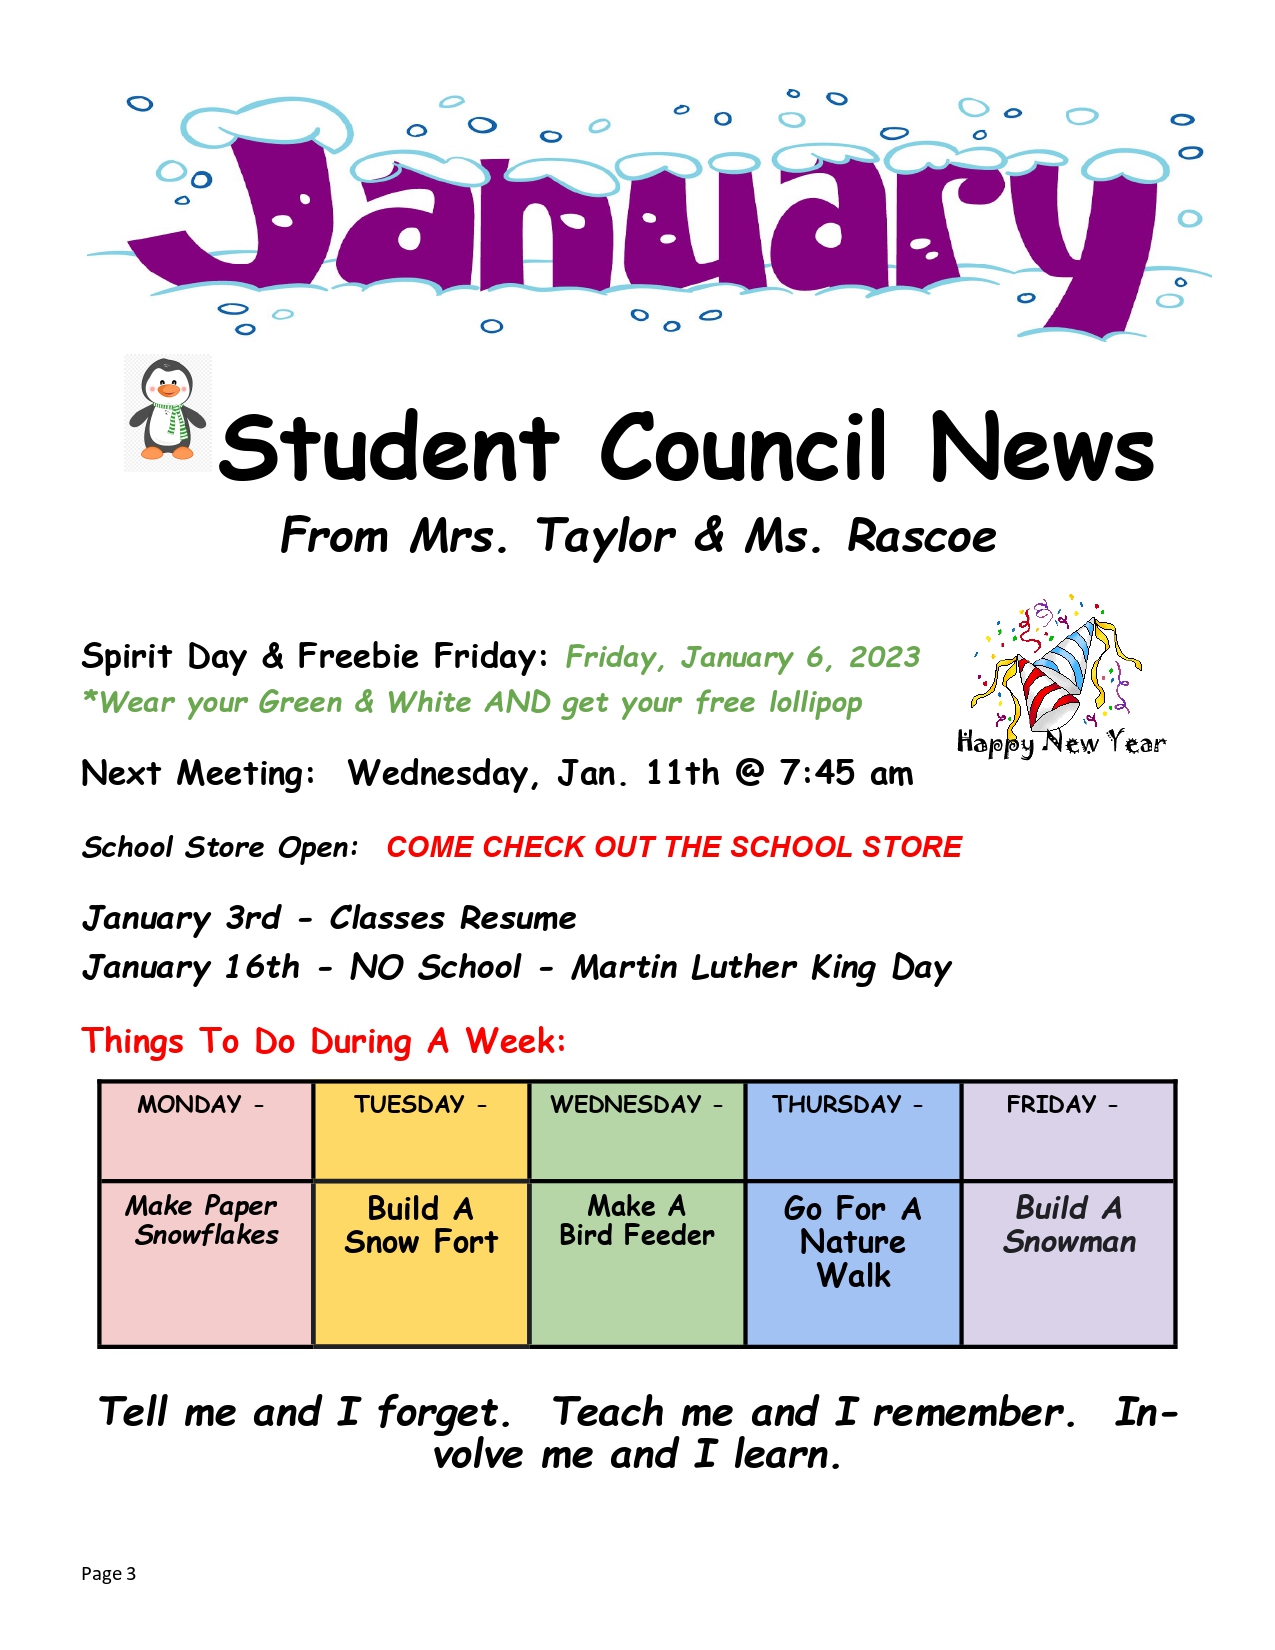 Student Council January News Image